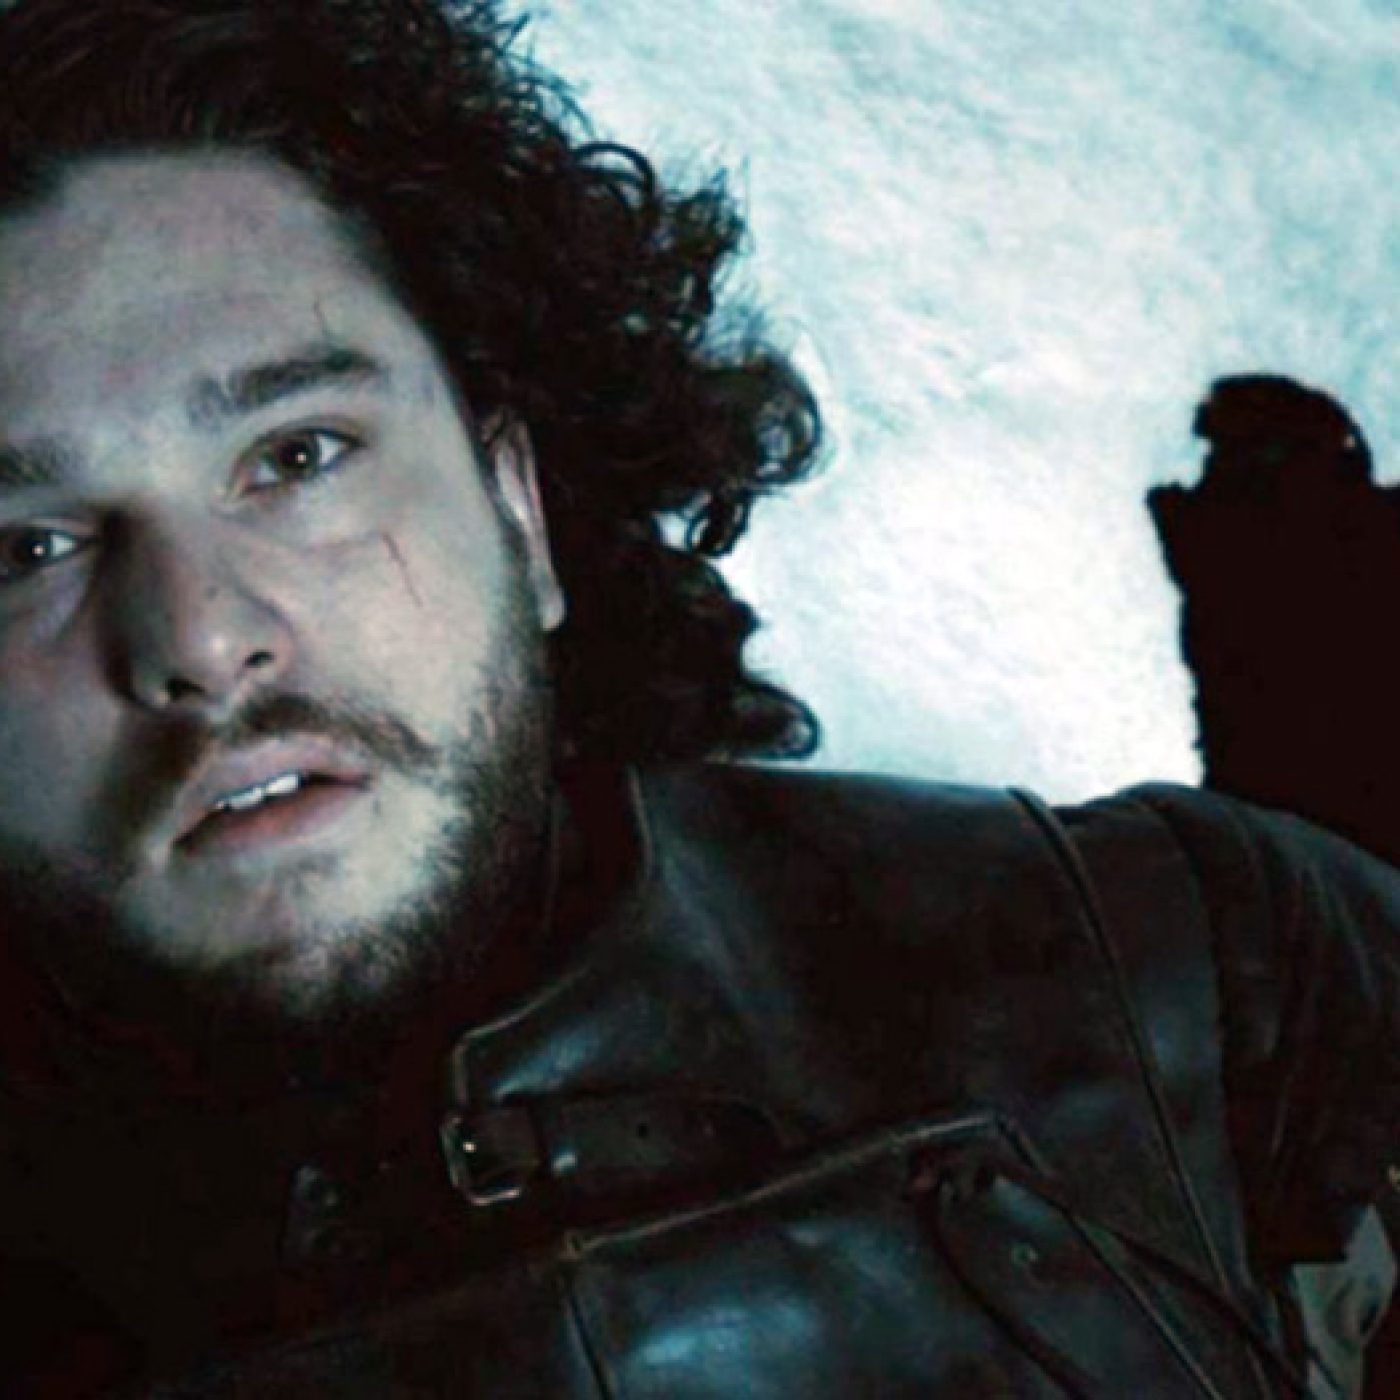 Game of Thrones Season 6 Streaming: Watch & Stream Online via HBO Max